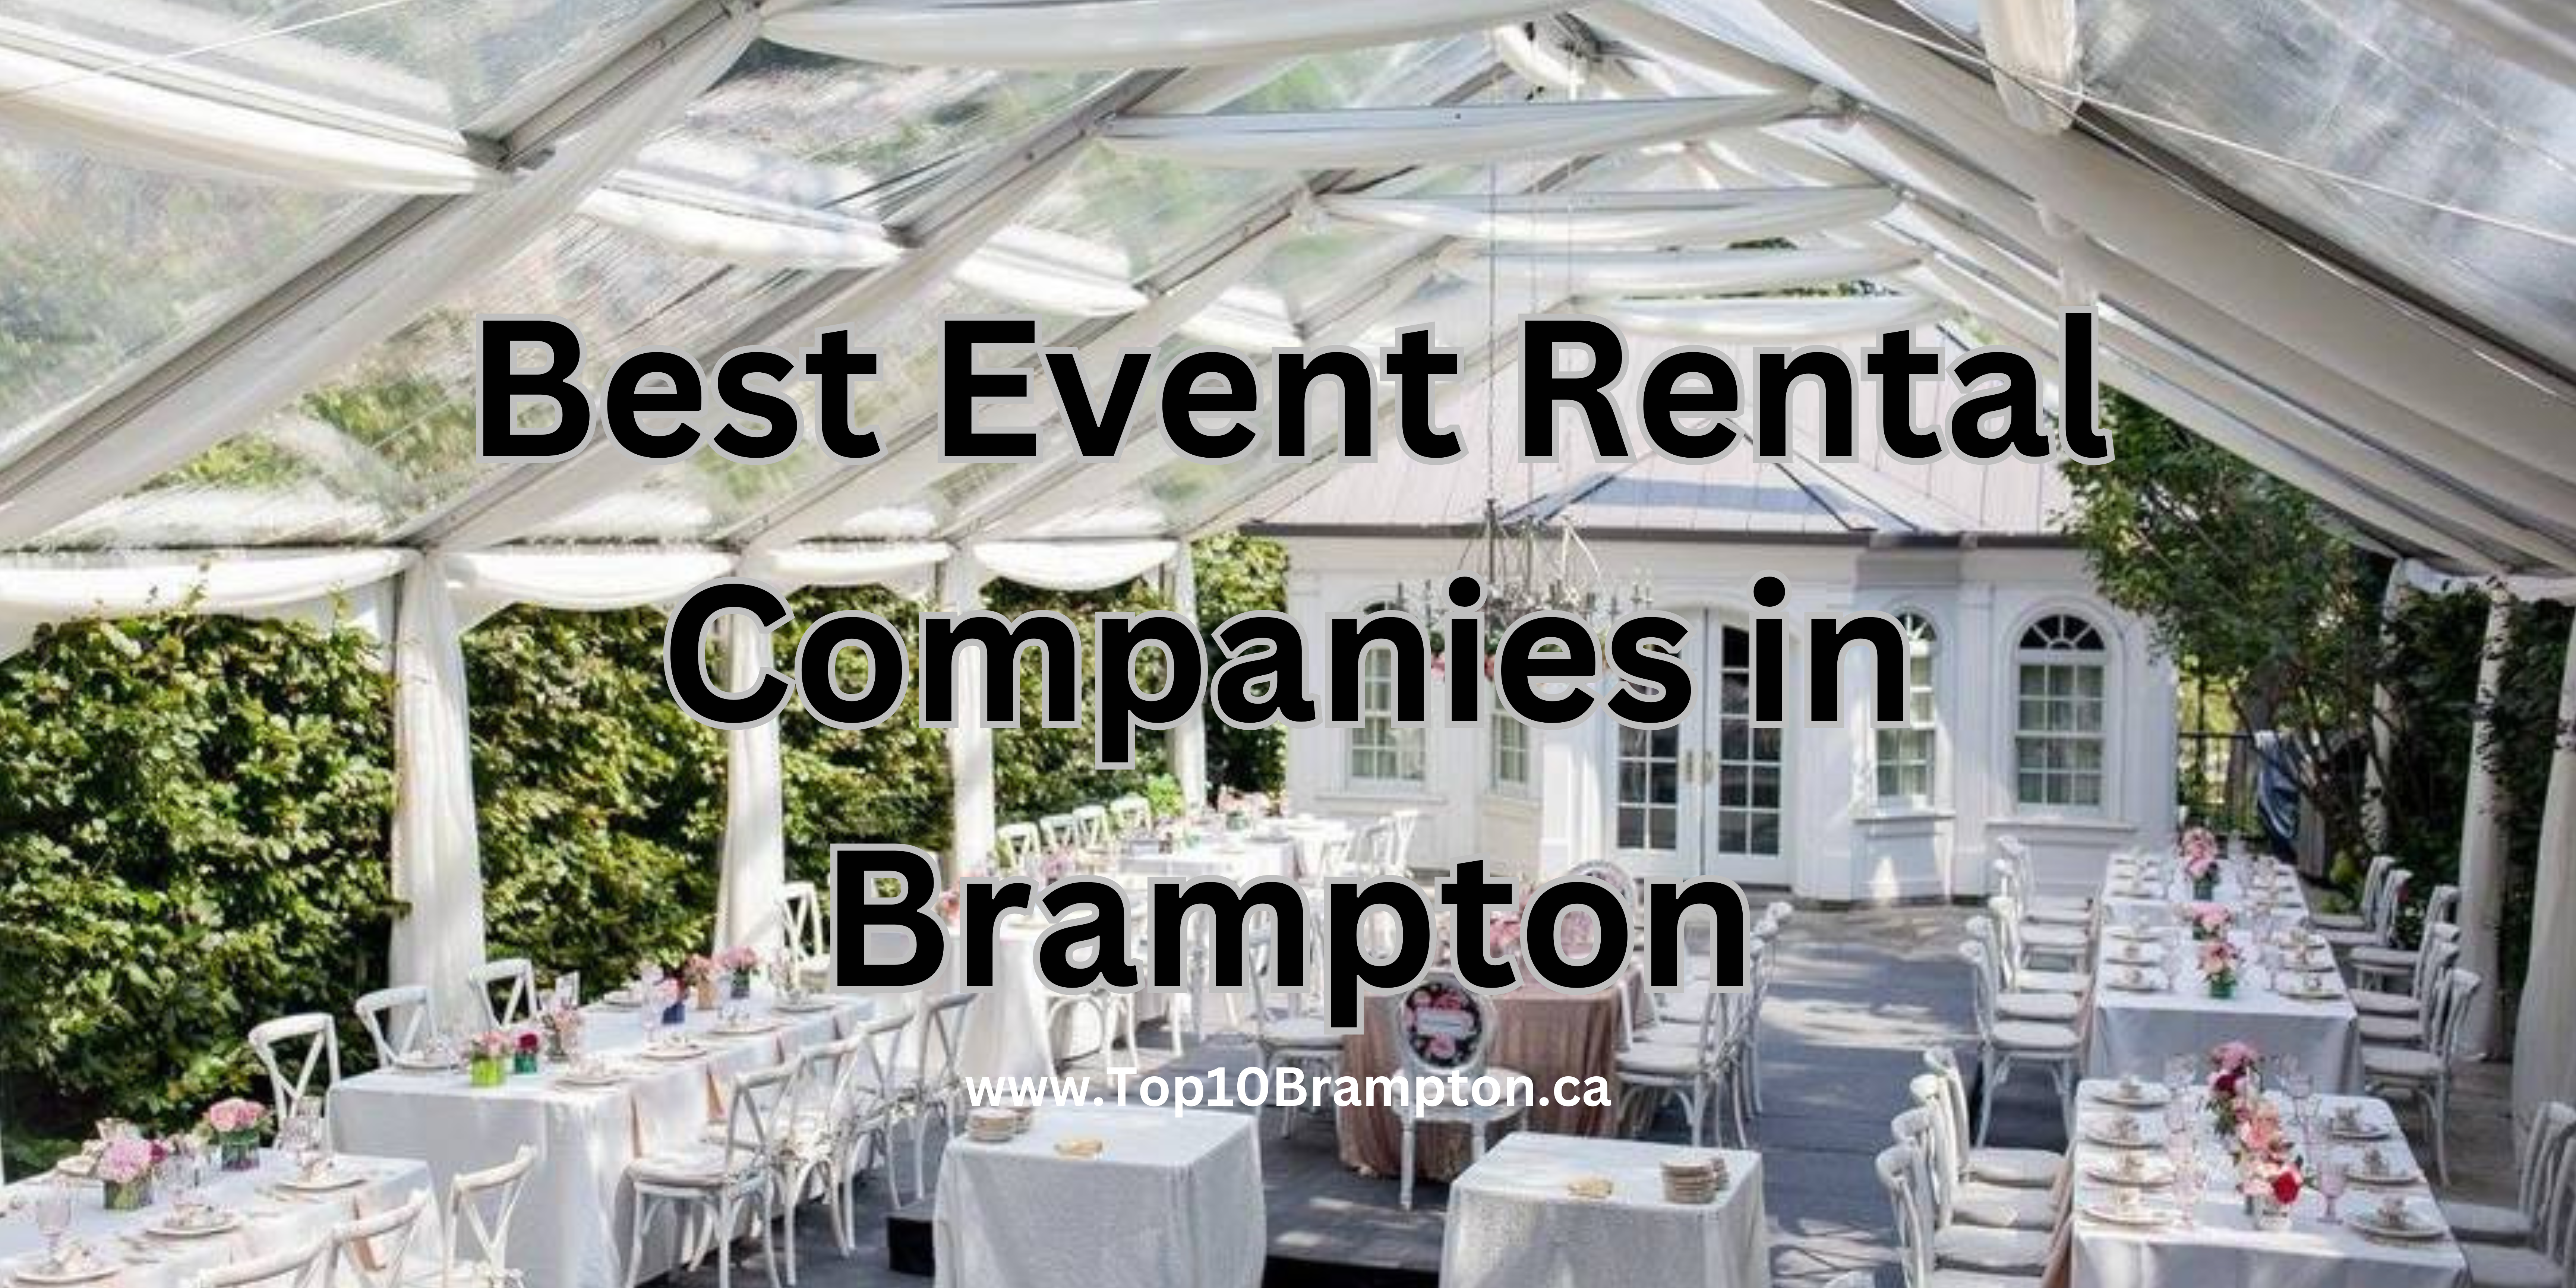 Best Event Rental Companies in Brampton